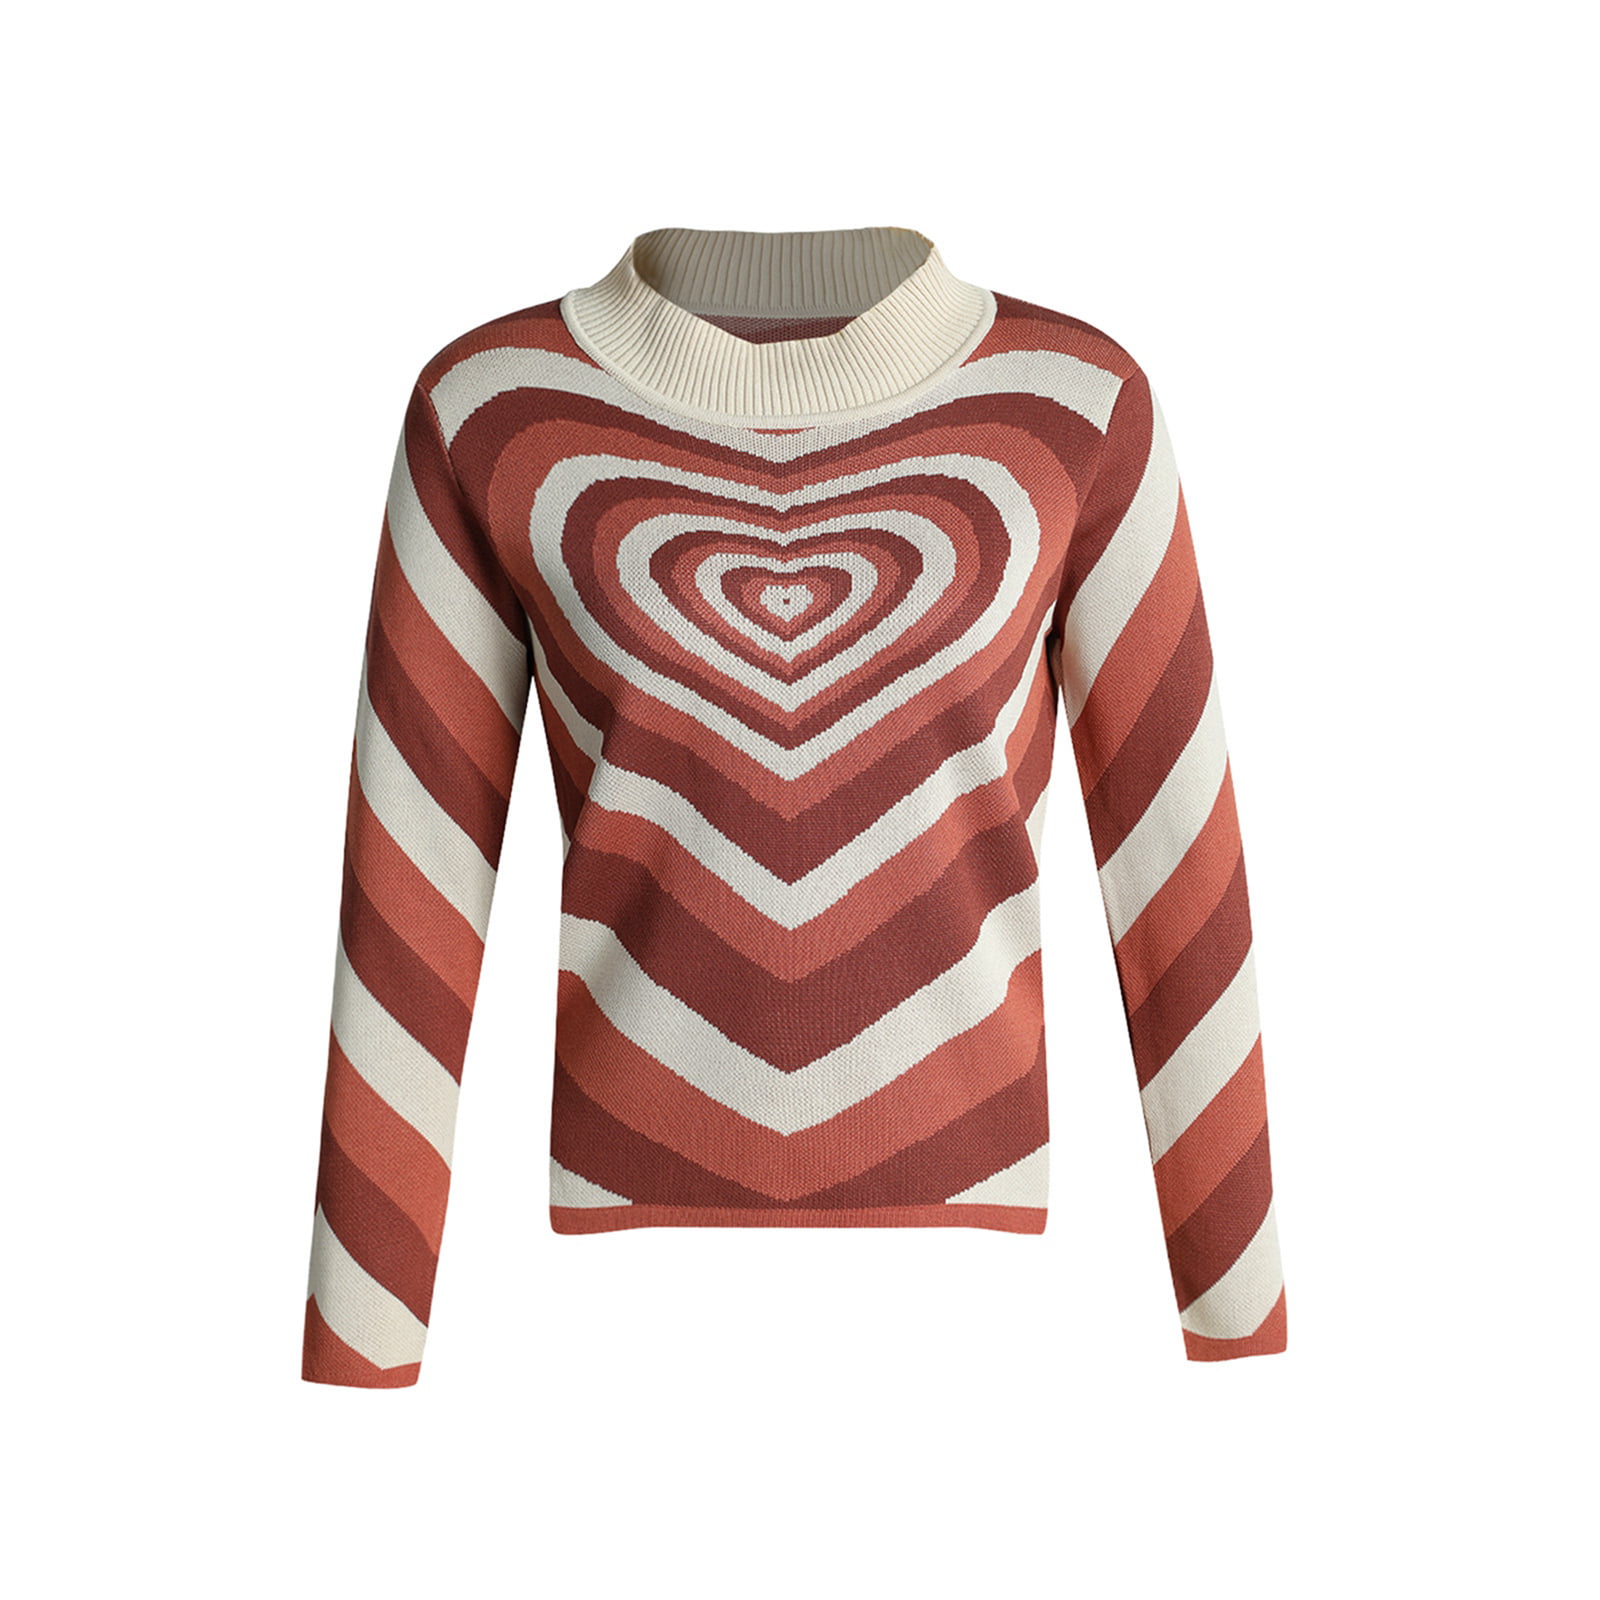 Sweatshirt for Women Casual Heart Print Pullover Crewneck Sweatshirt Hoodie Oversized Long Sleeve Streetwear Tops 